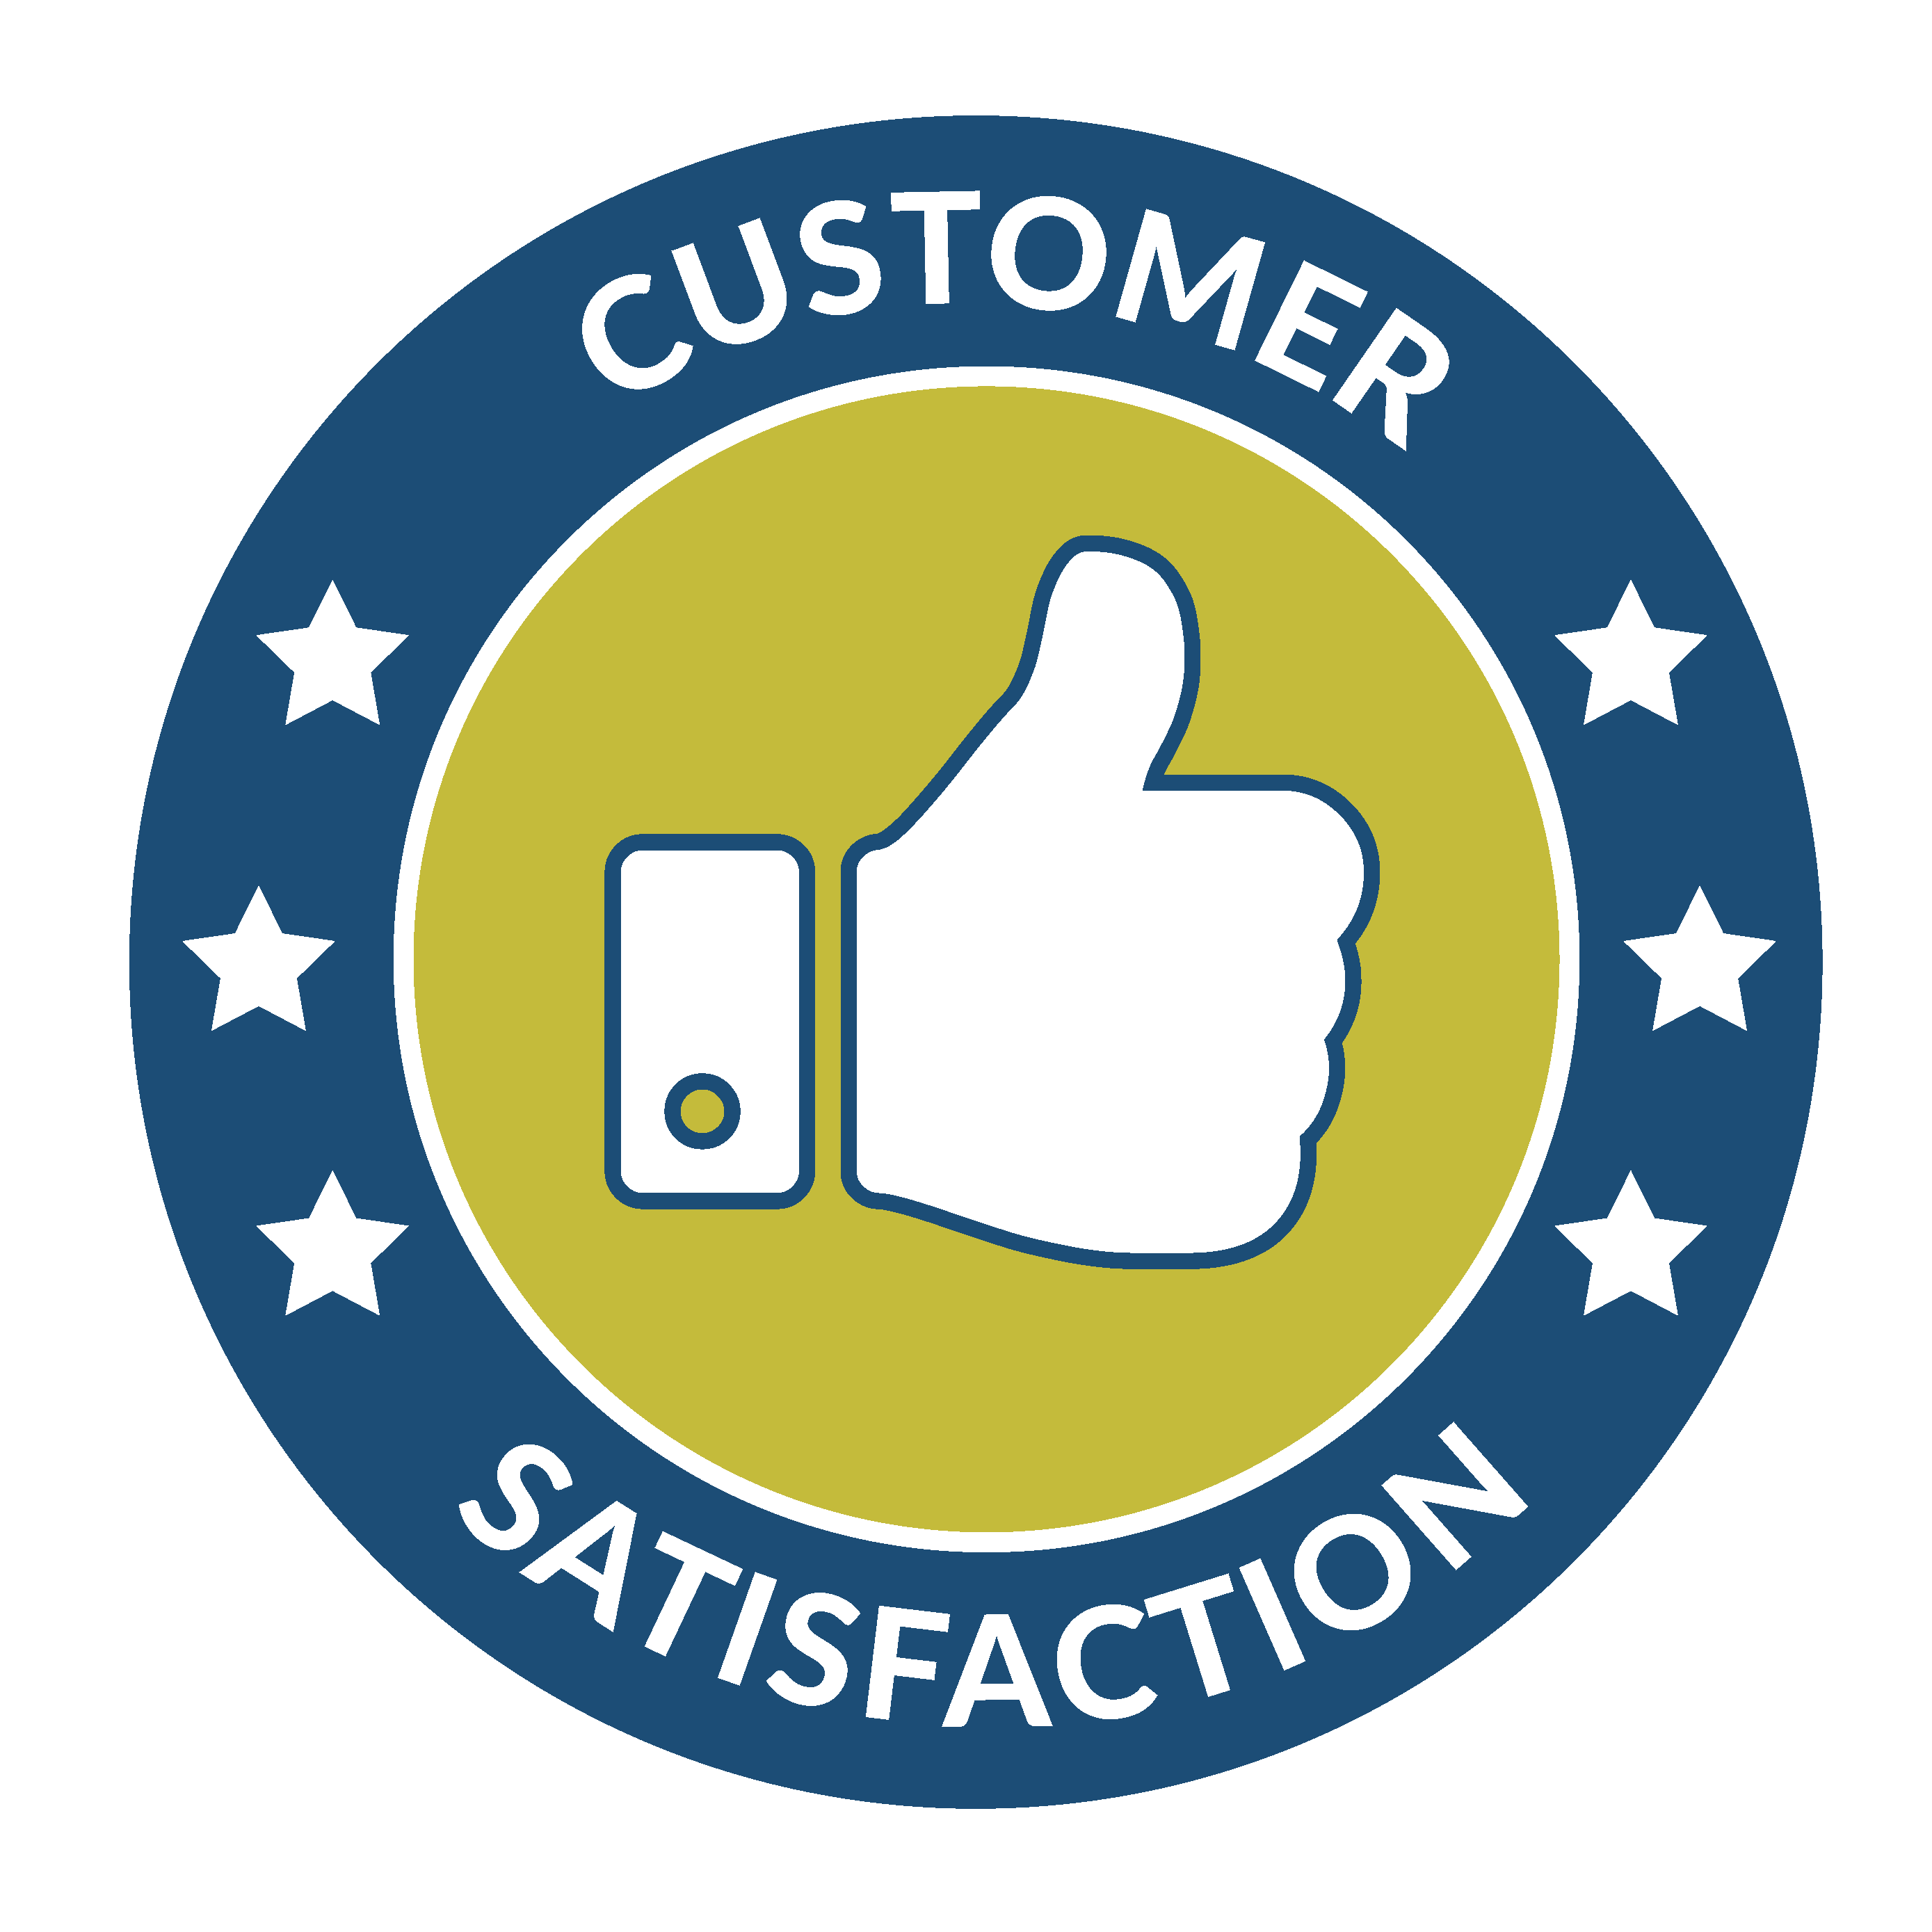 Your bi. Customer satisfaction. Логотип удовольствие. Customer satisfaction PNG. Increasing customer satisfaction.